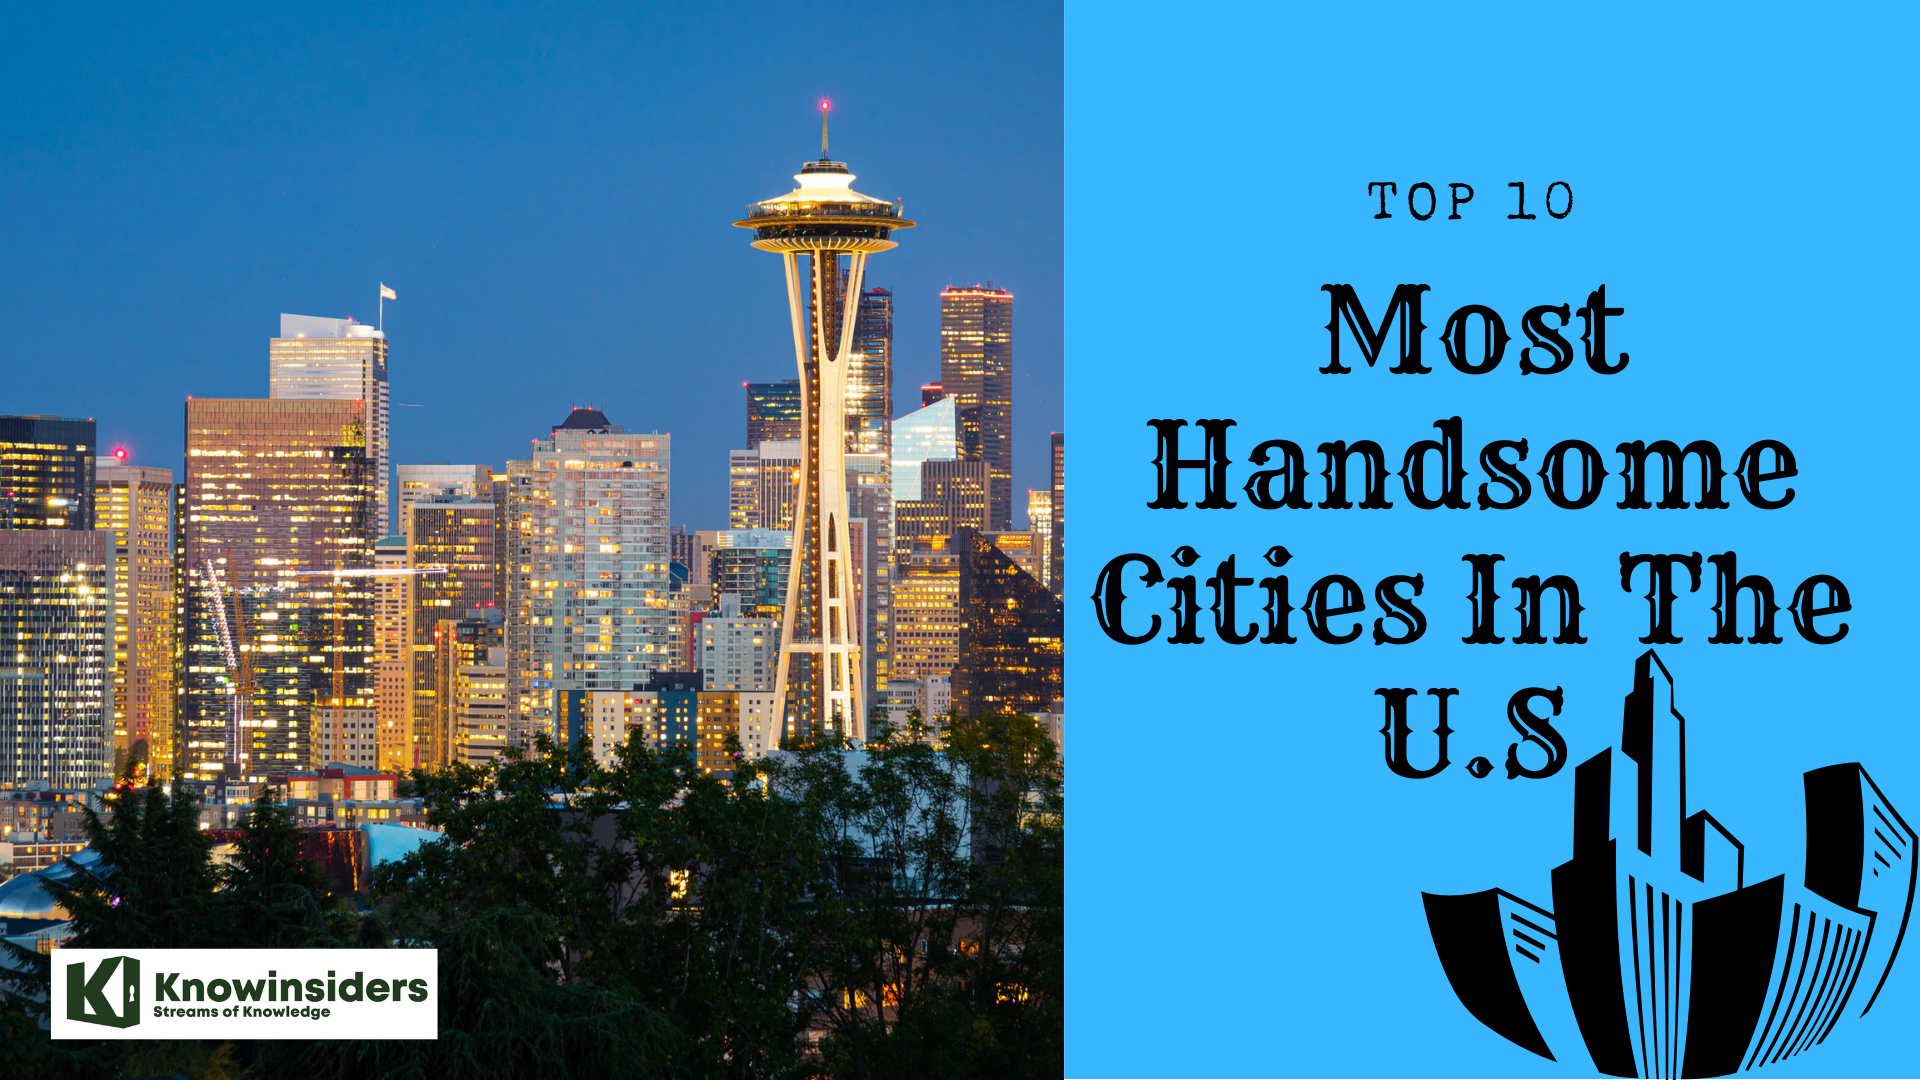 Top 10 US Cities With Most Handsome Men